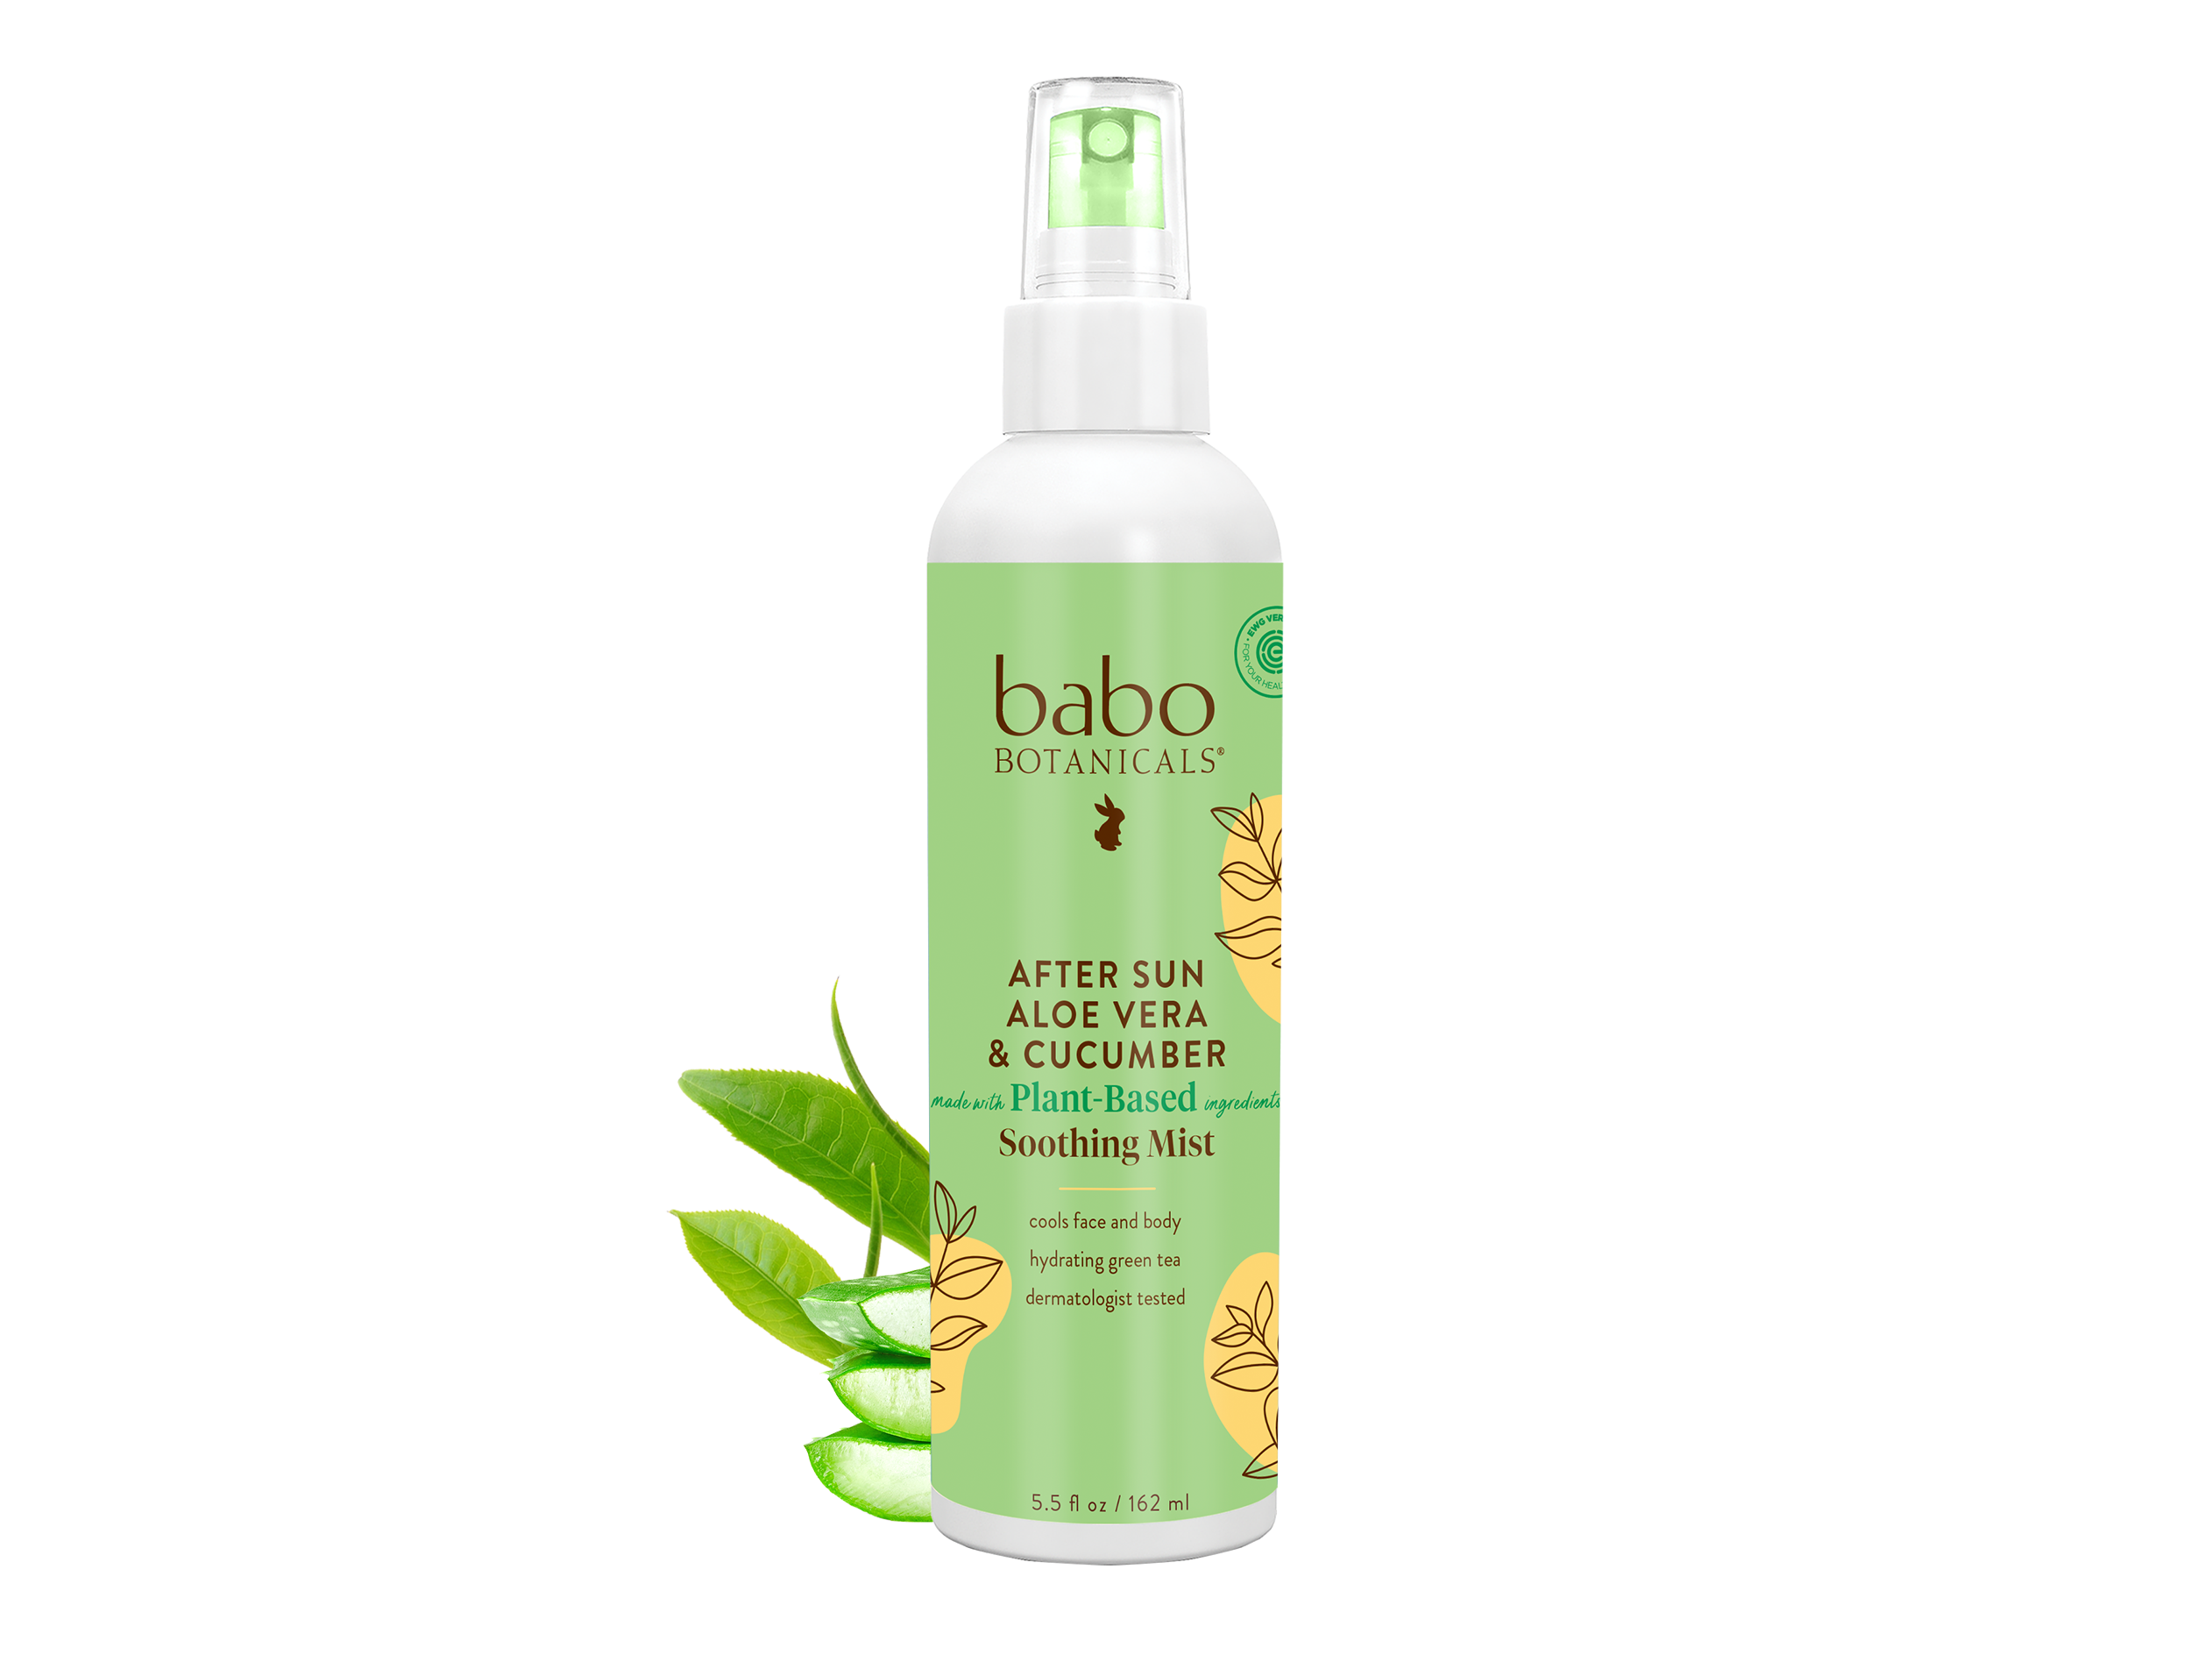 Babo botanicals- After sun Aloe Vera & cucumber soothing mist